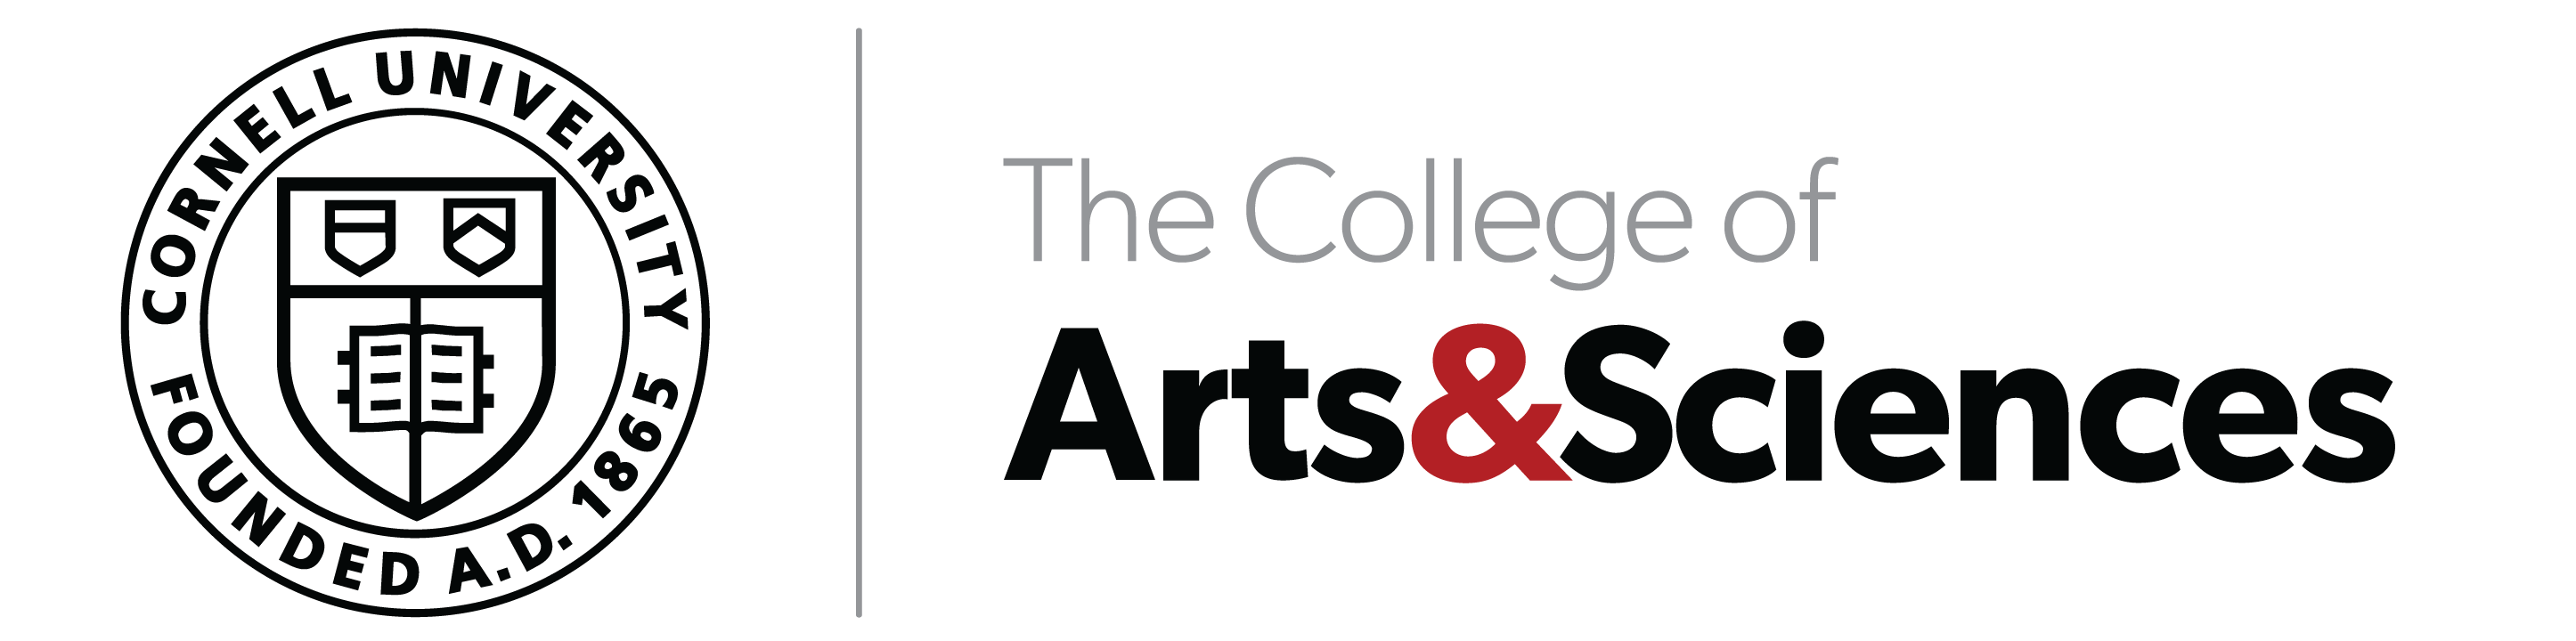 College of Arts & Science website homepage